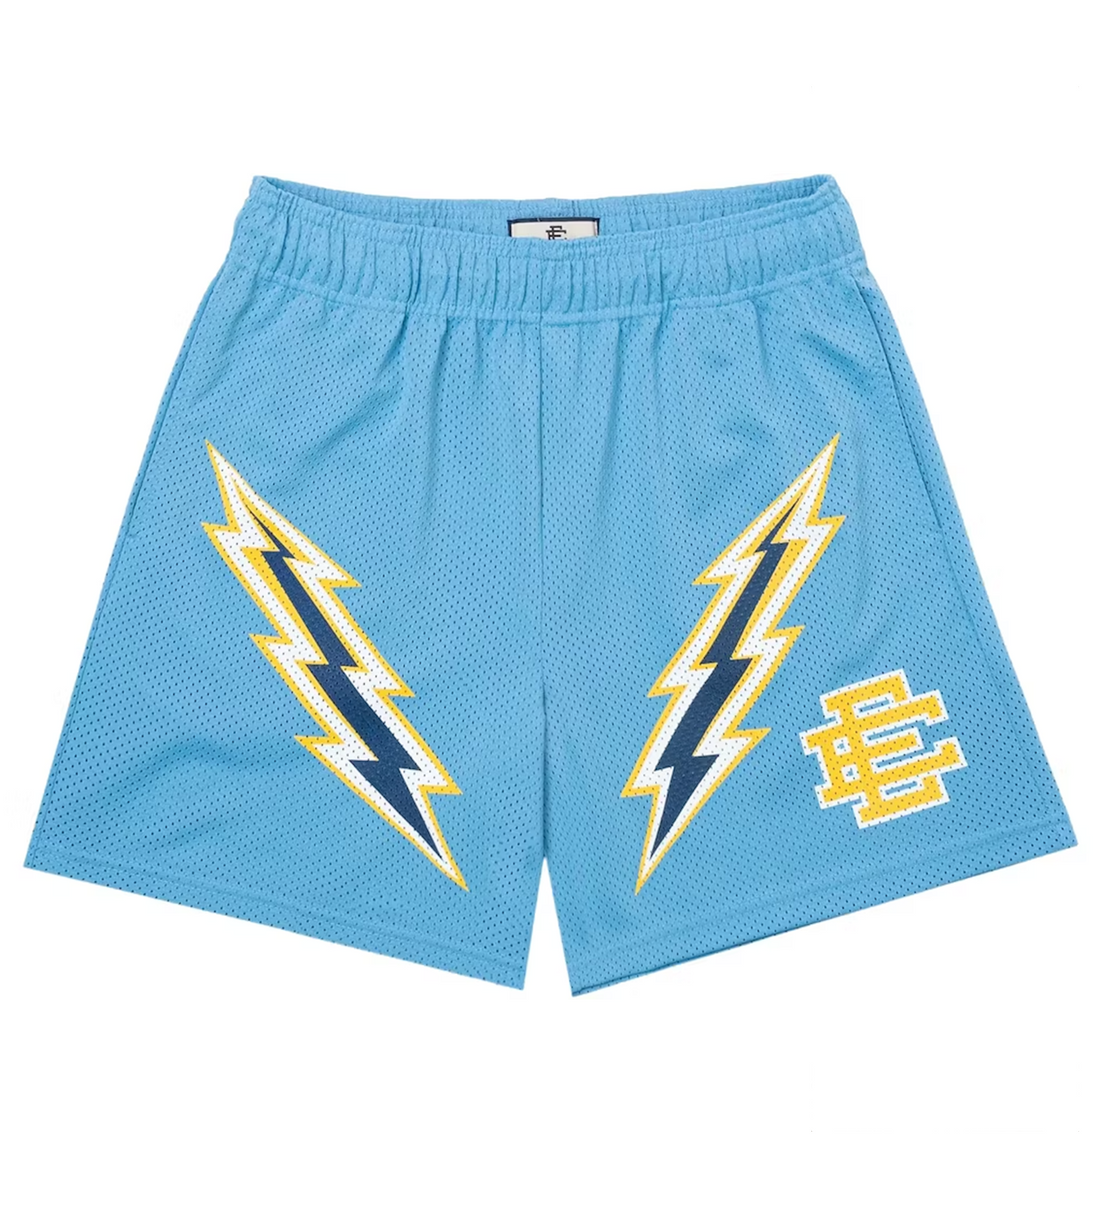 Eric Emanuel Blue Lightning Blue/Yellow Shorts